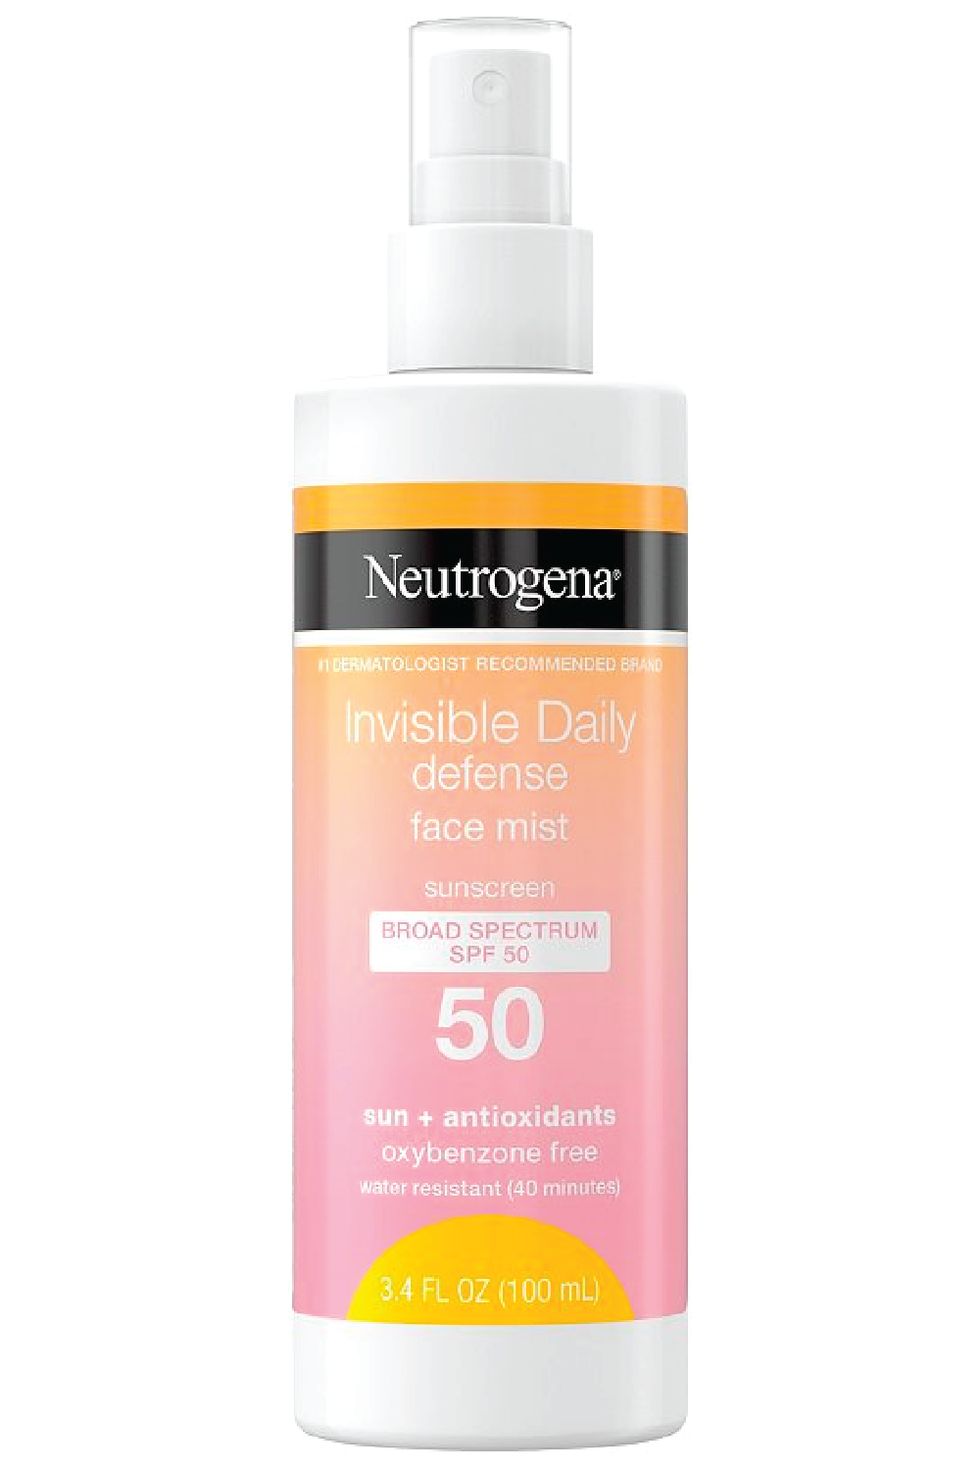 Neutrogena Invisible Daily Defense Face Mist SPF 50